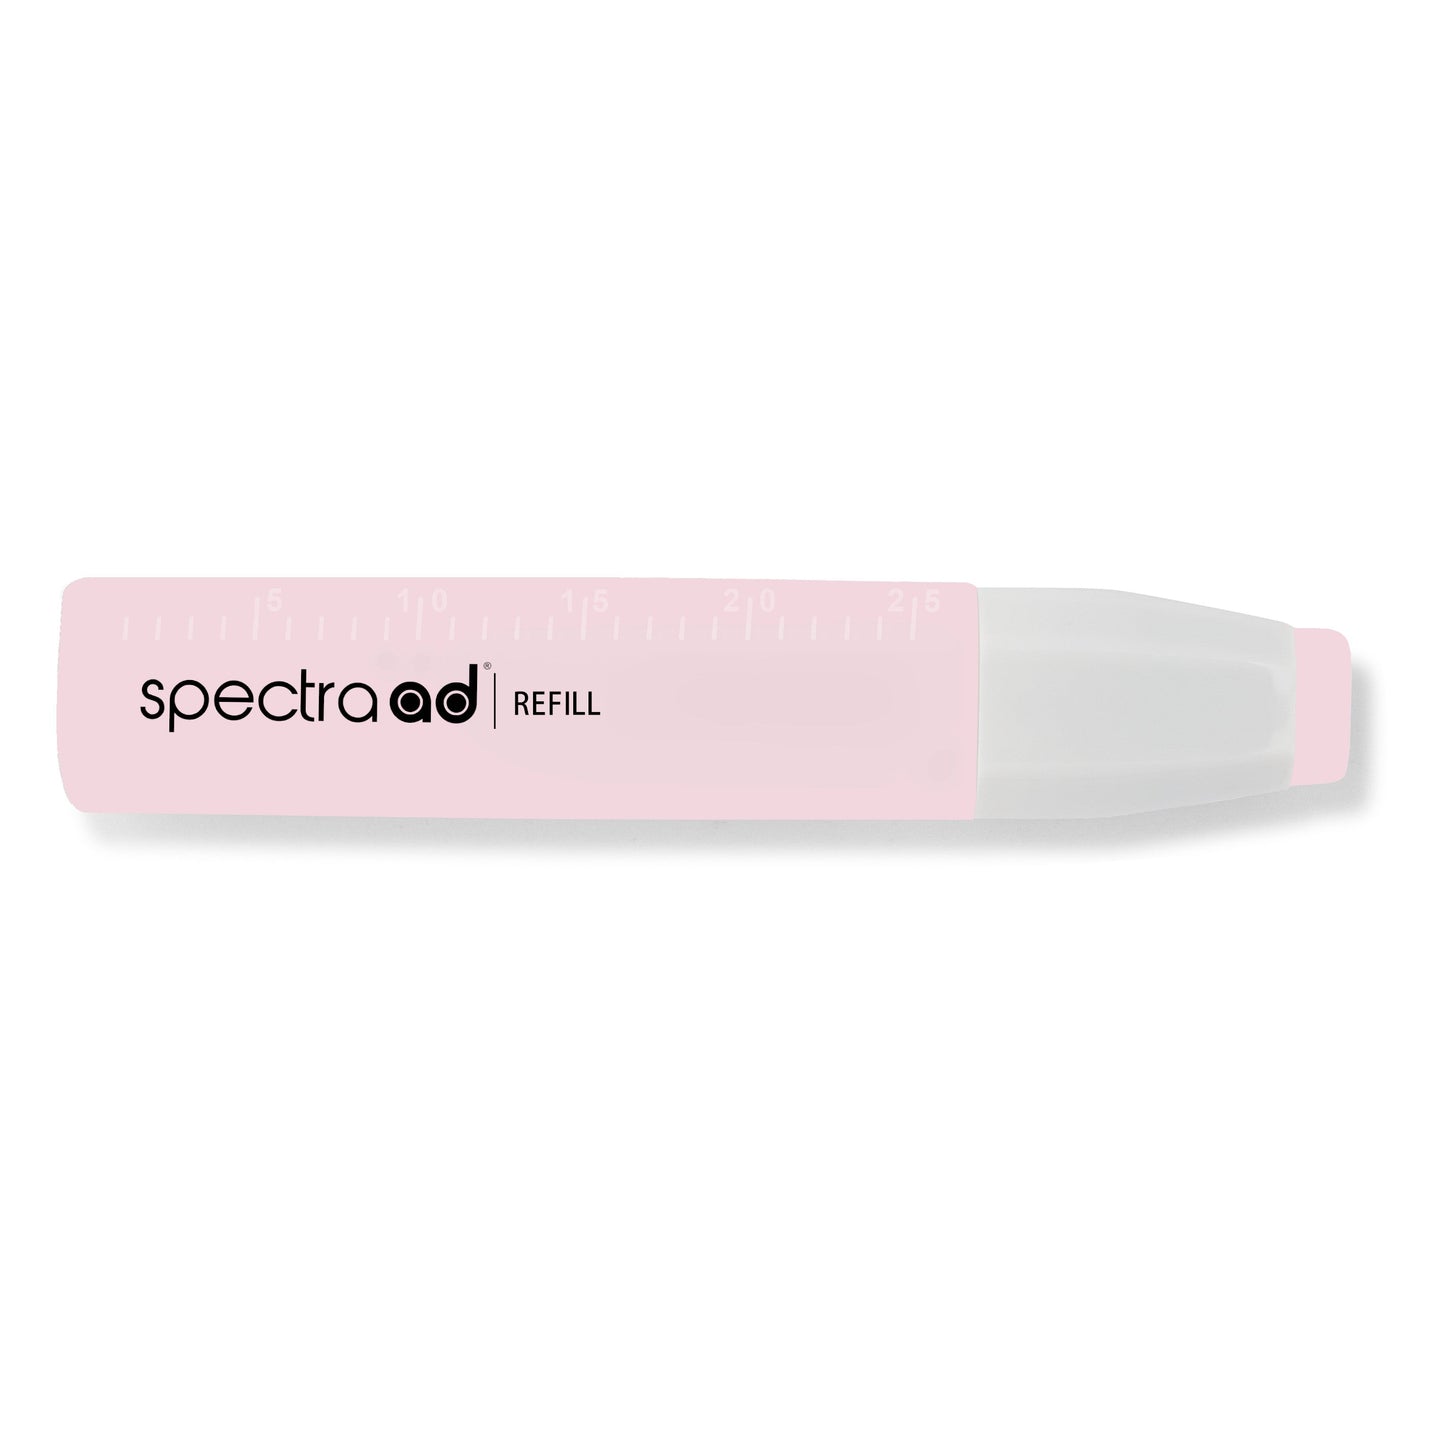 094 - Shell - Spectra AD Refill Bottle